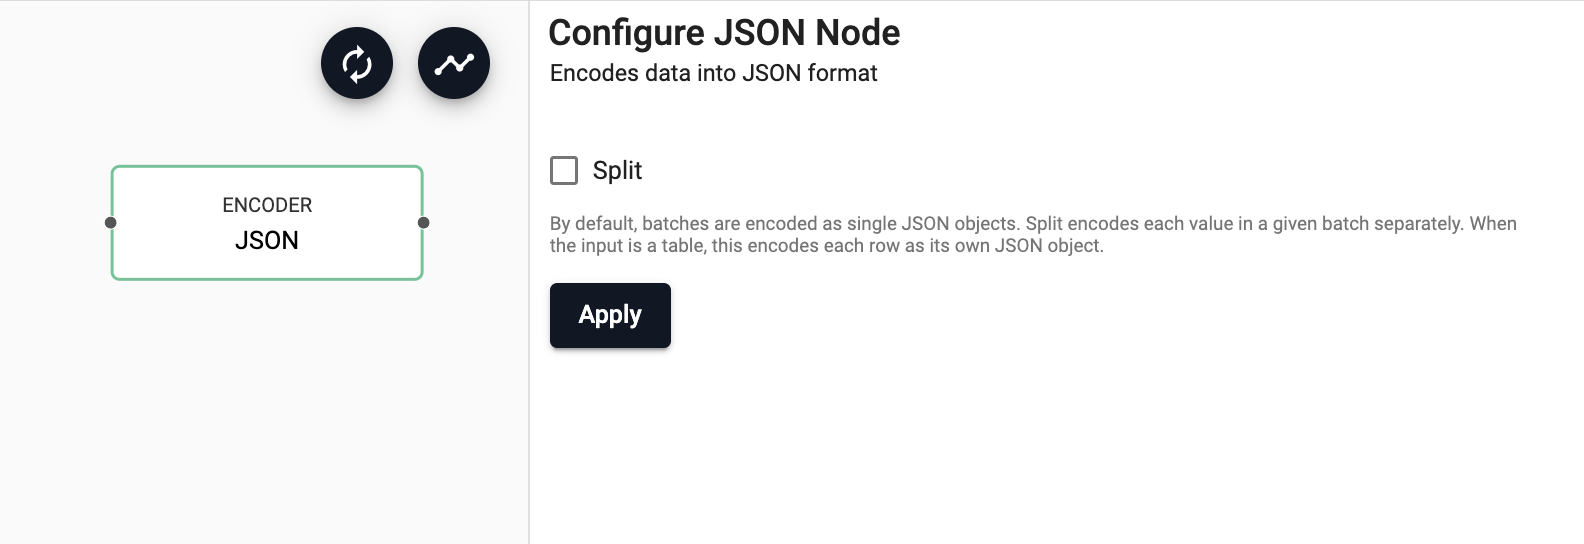 JSON encoder node properties